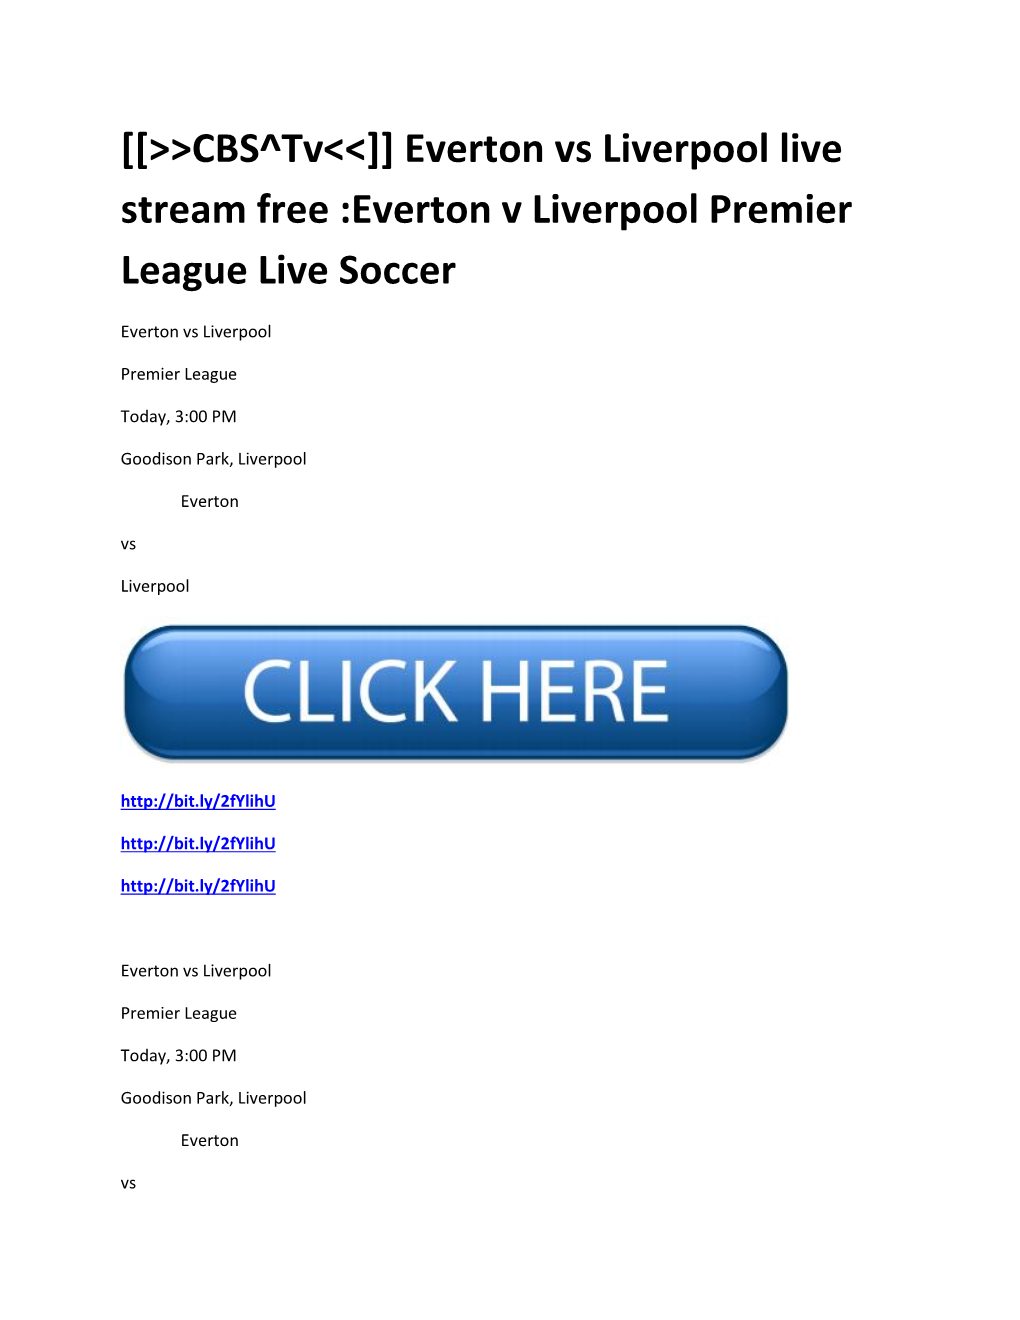 CBS^Tv&lt;&lt;]] Everton Vs Liverpool Live Stream Free :Everton V